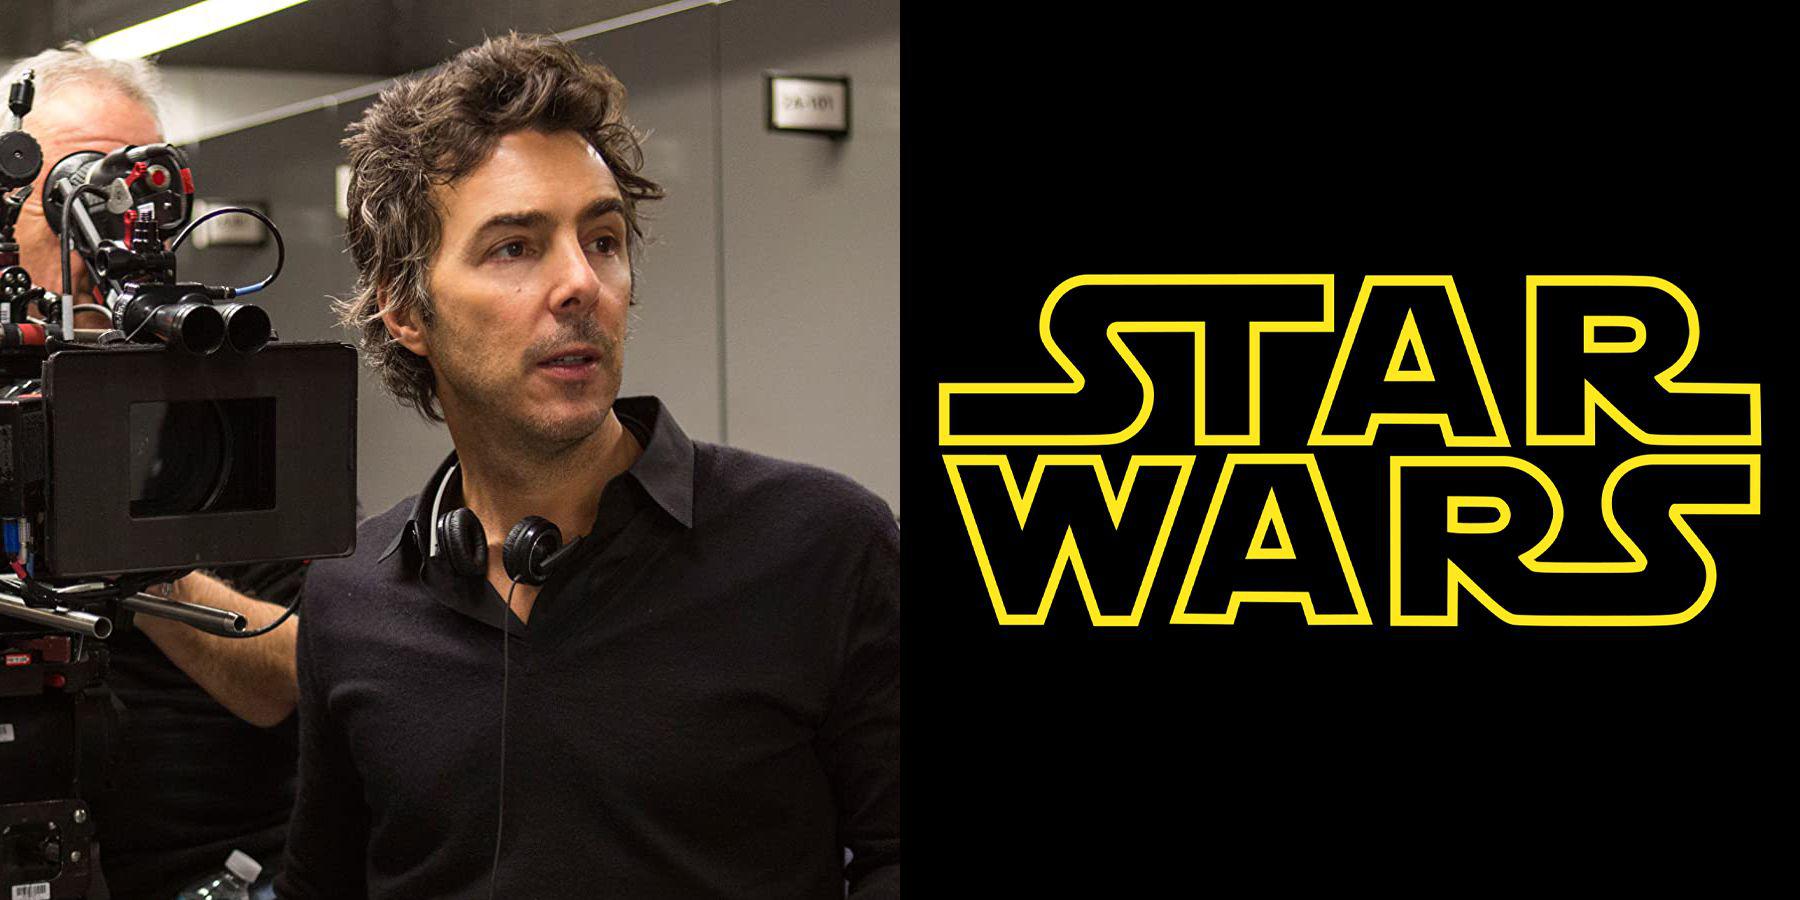 Shawn Levy atualiza o status de seu projeto Star Wars